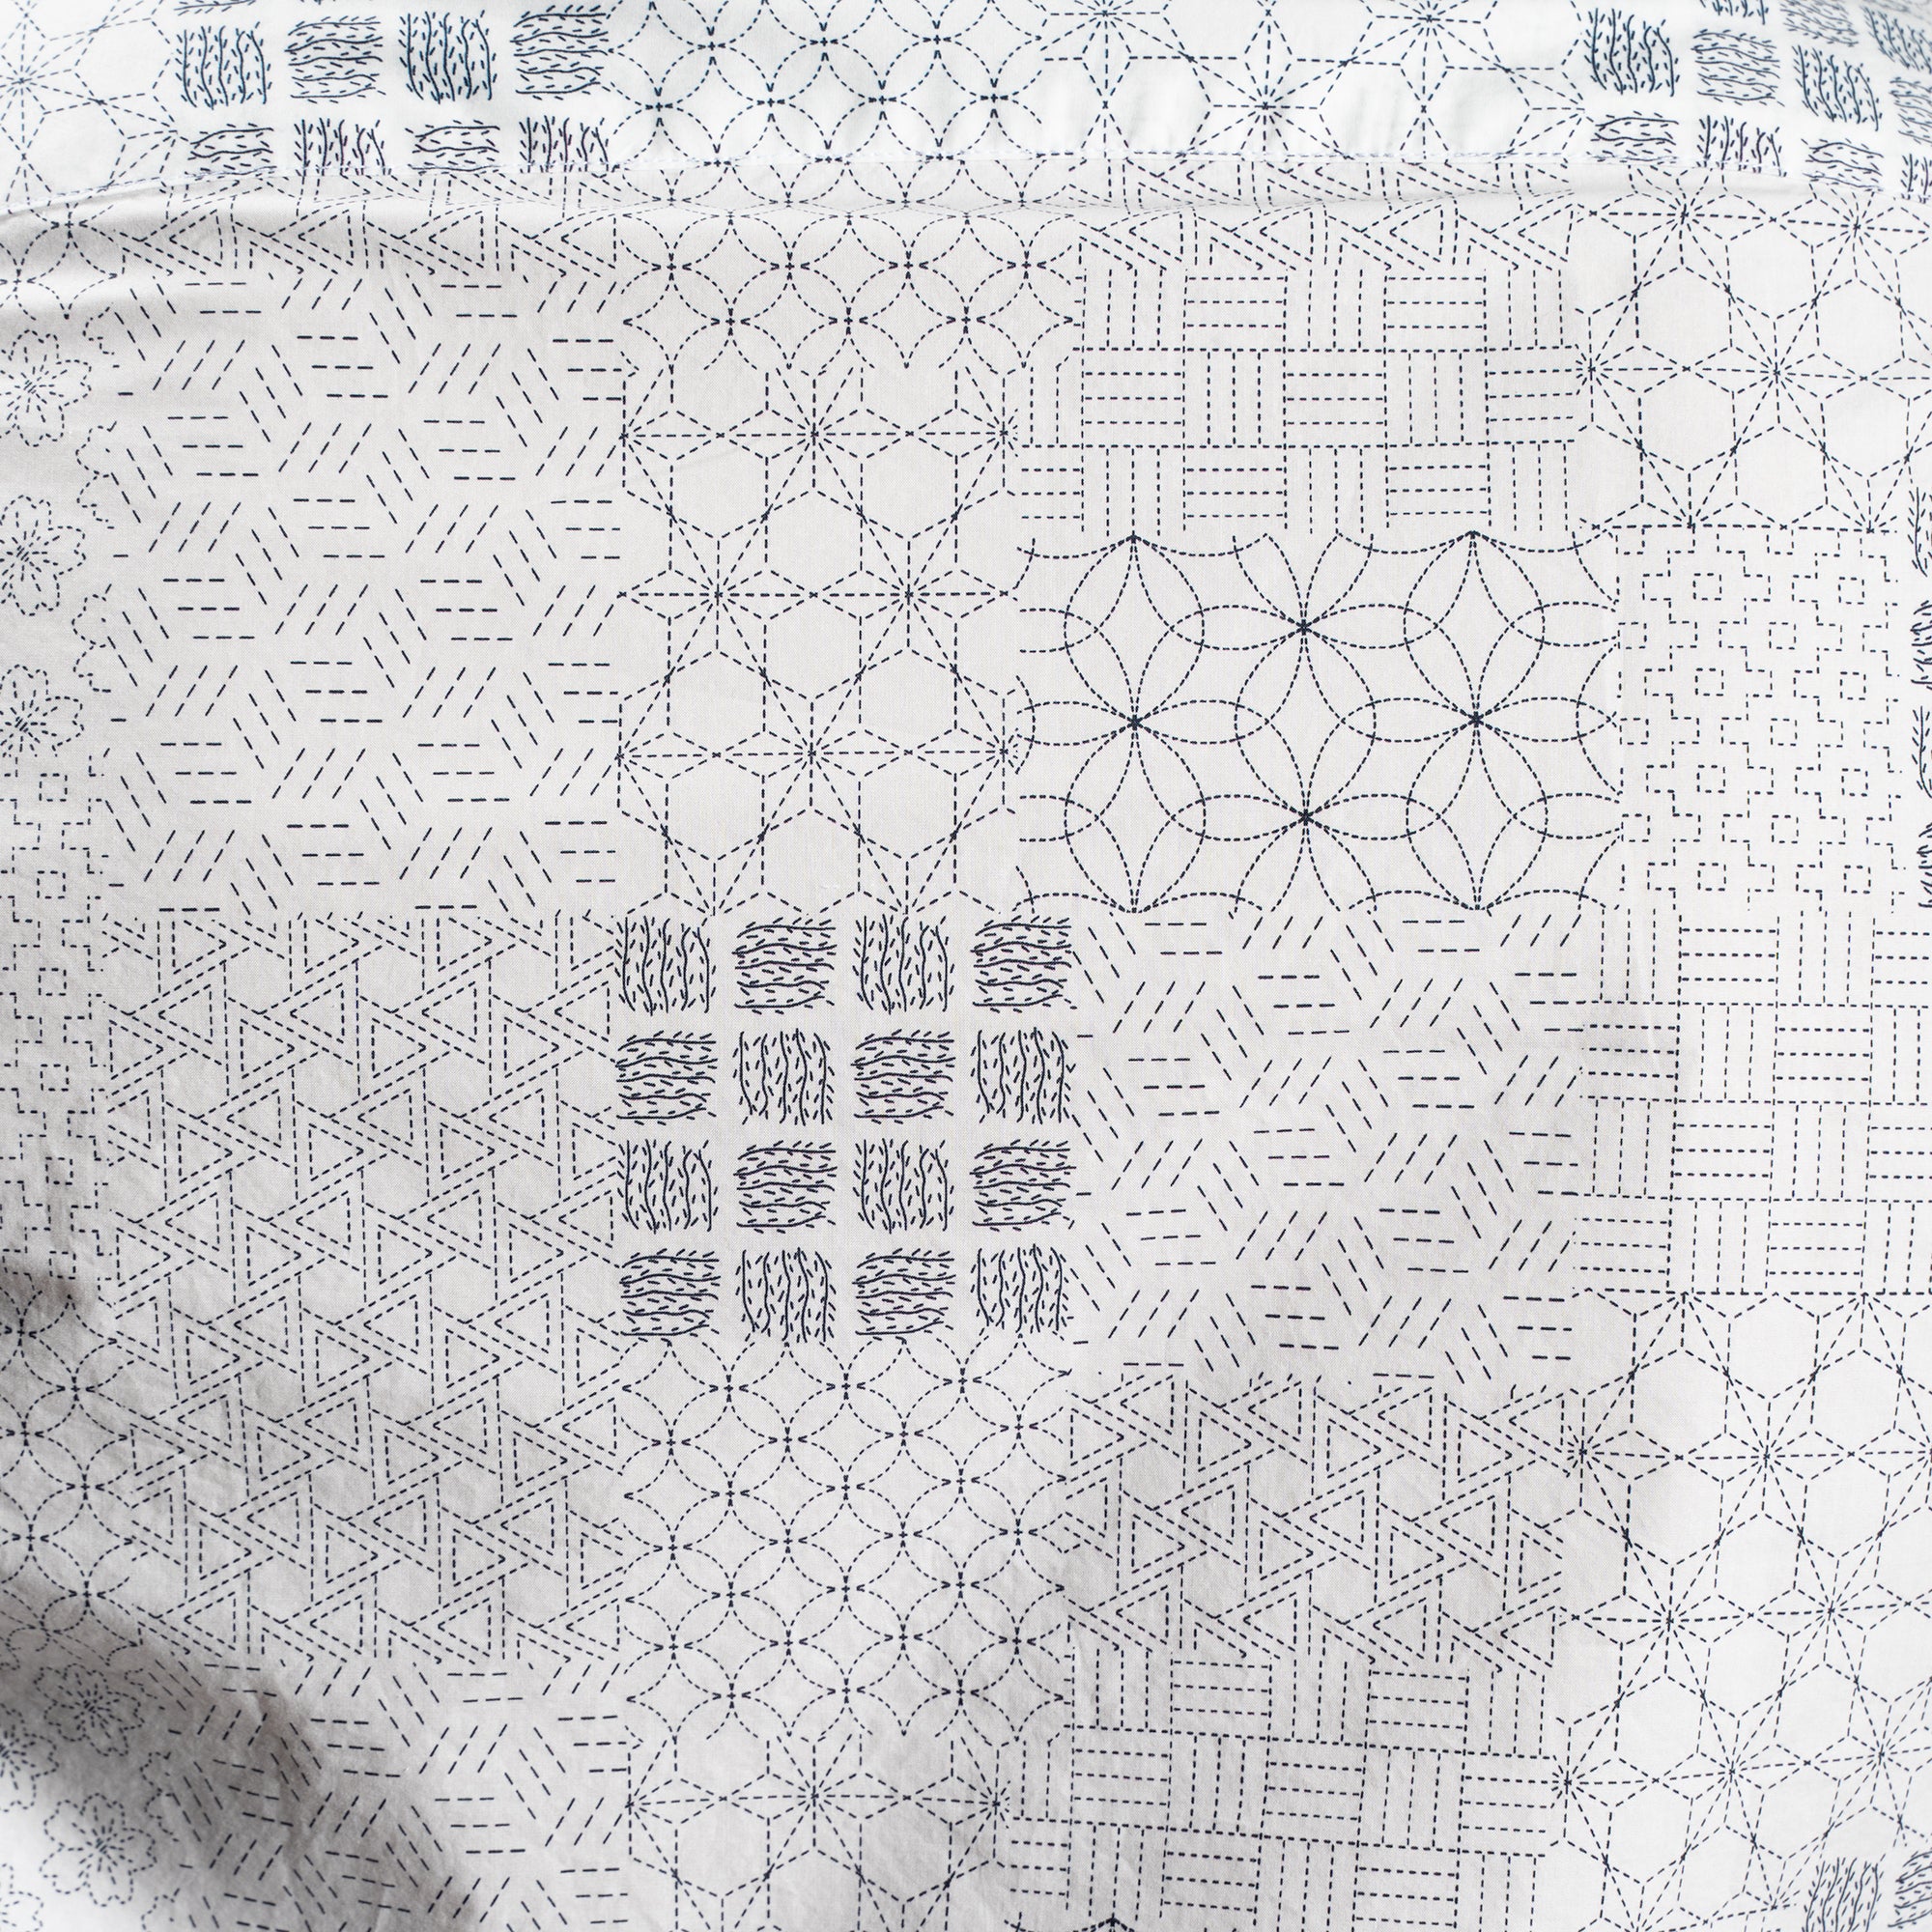 Weekend Printed Shirt - White Geometric